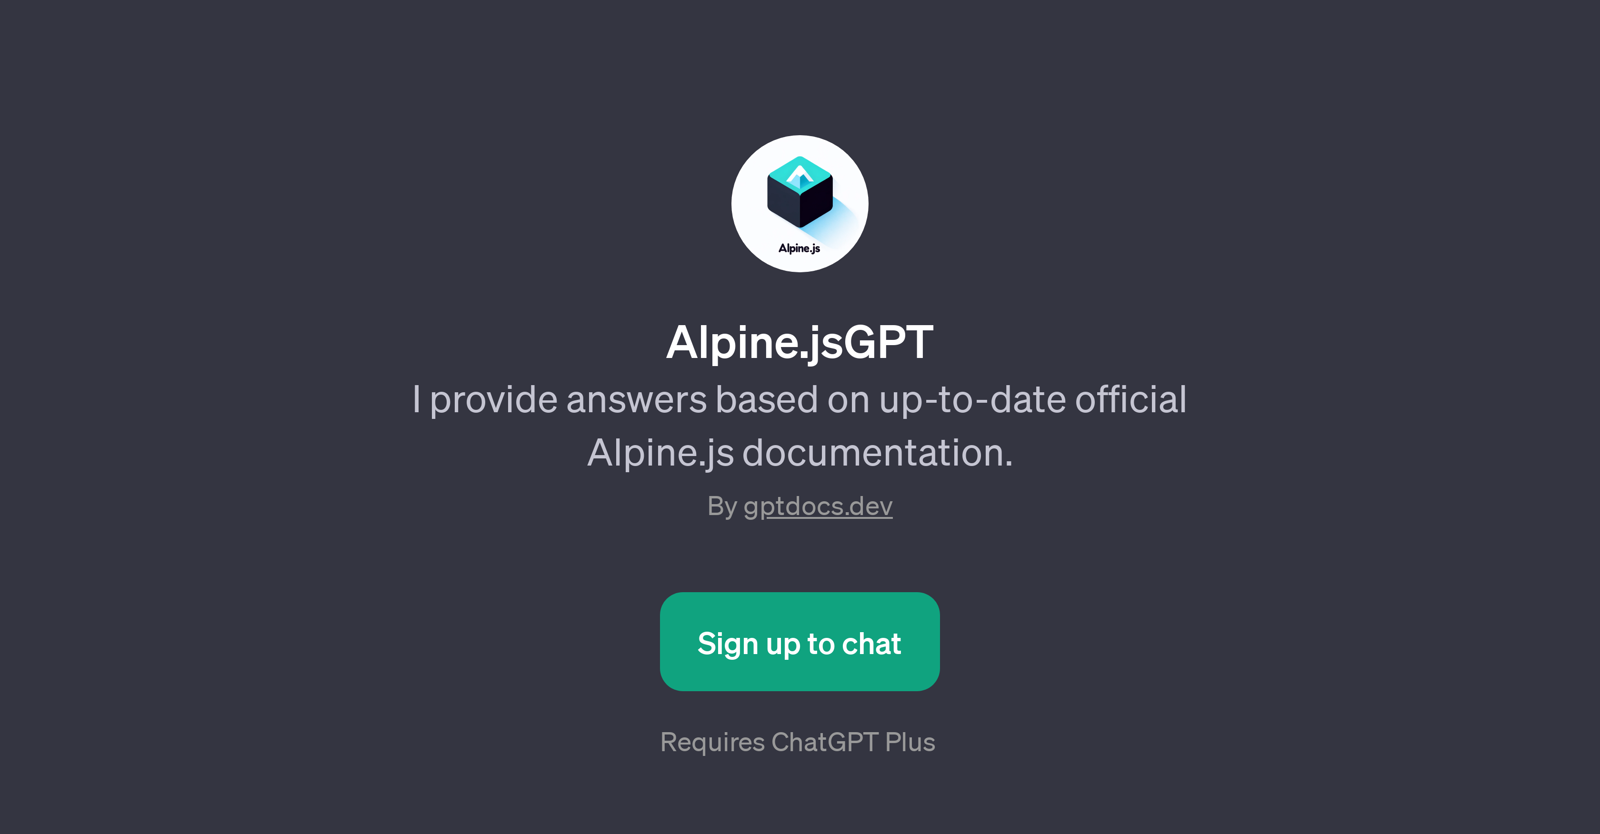 Alpine.jsGPT website